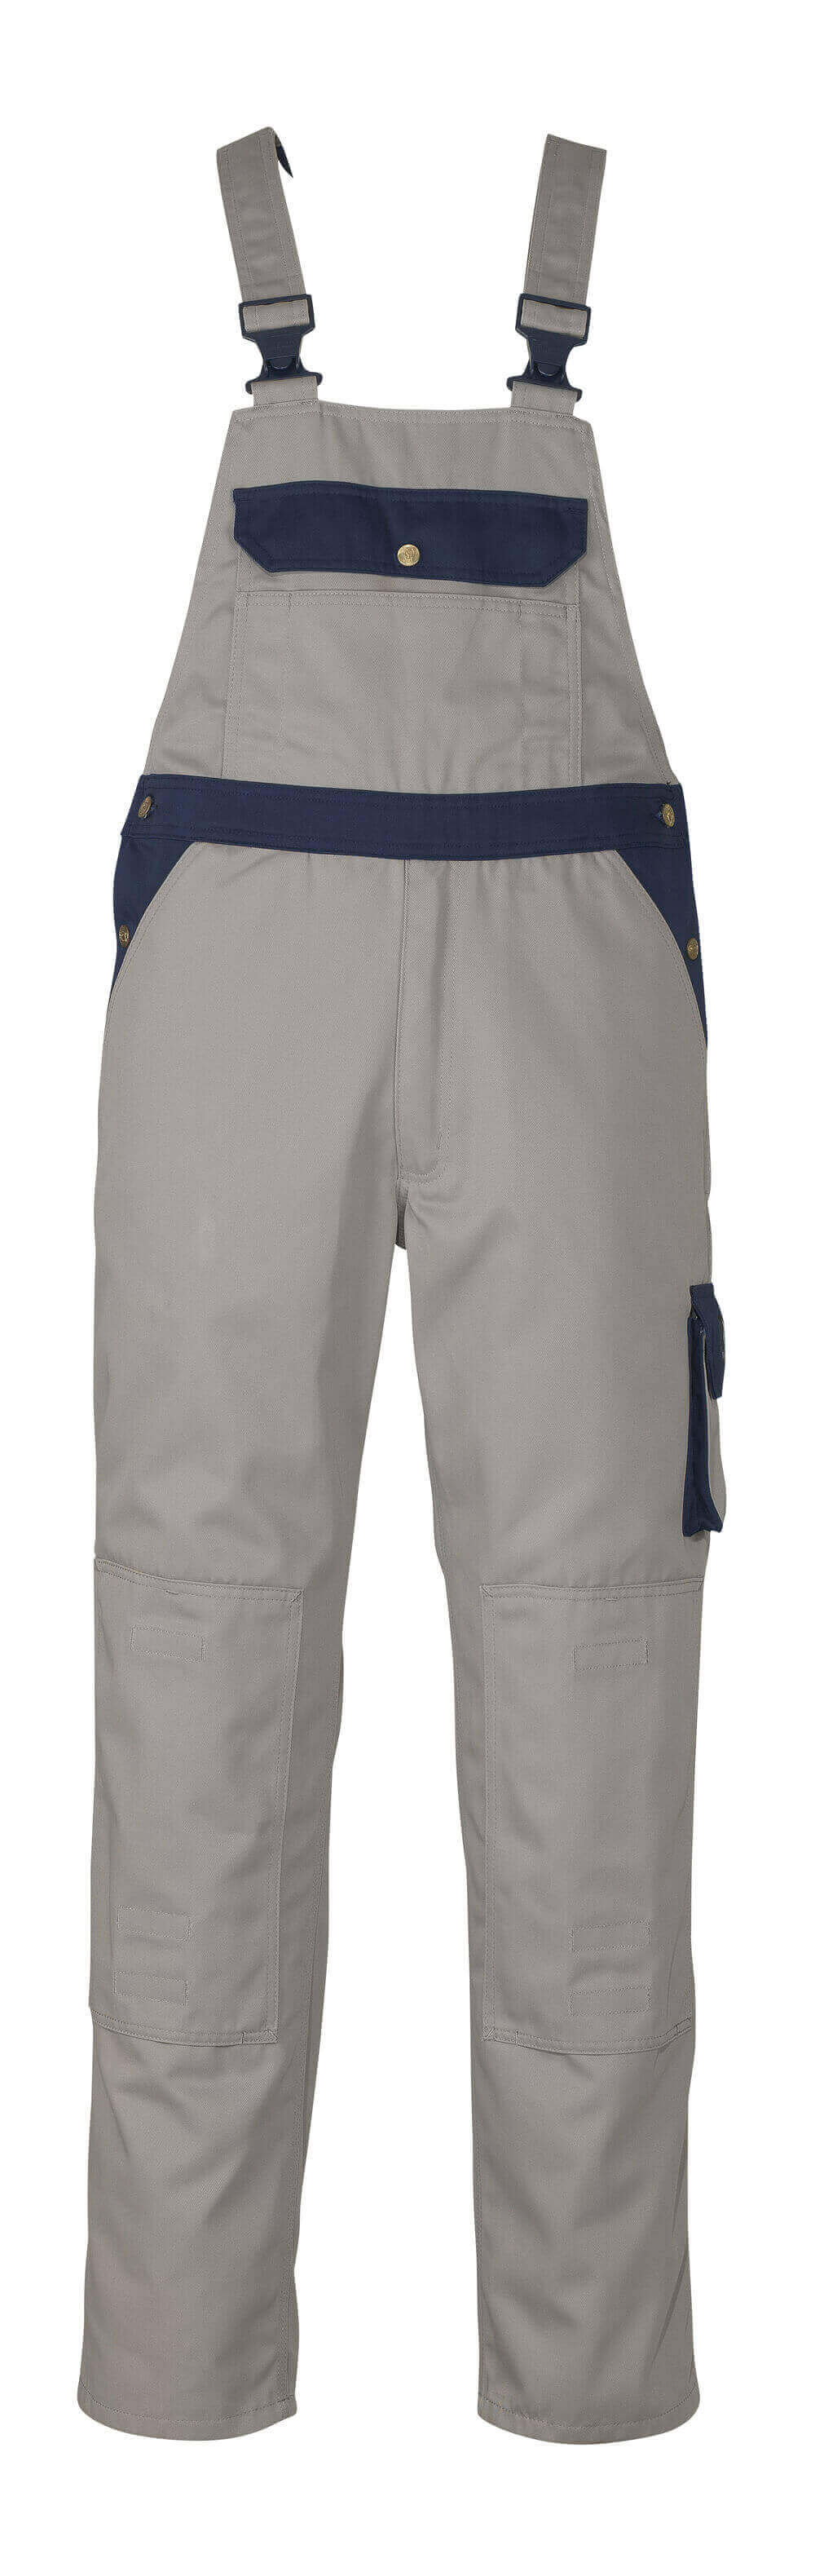 Mascot IMAGE  Milano Bib & Brace with kneepad pockets 00969 light grey/navy